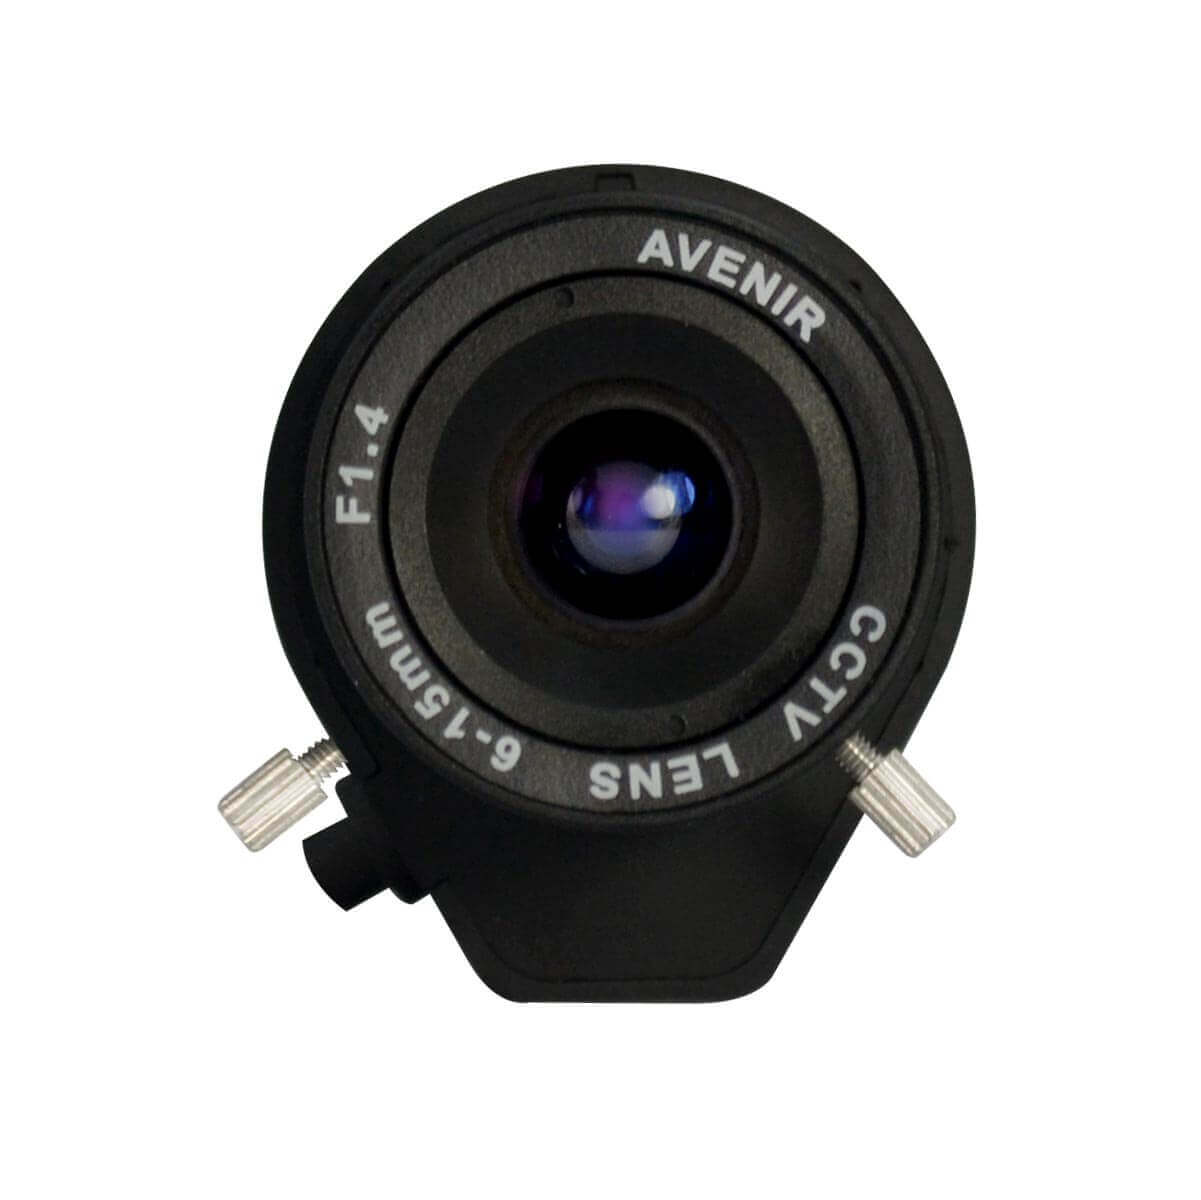 Lente varifocal 6 - 15mm auto-iris, para camaras tipo box